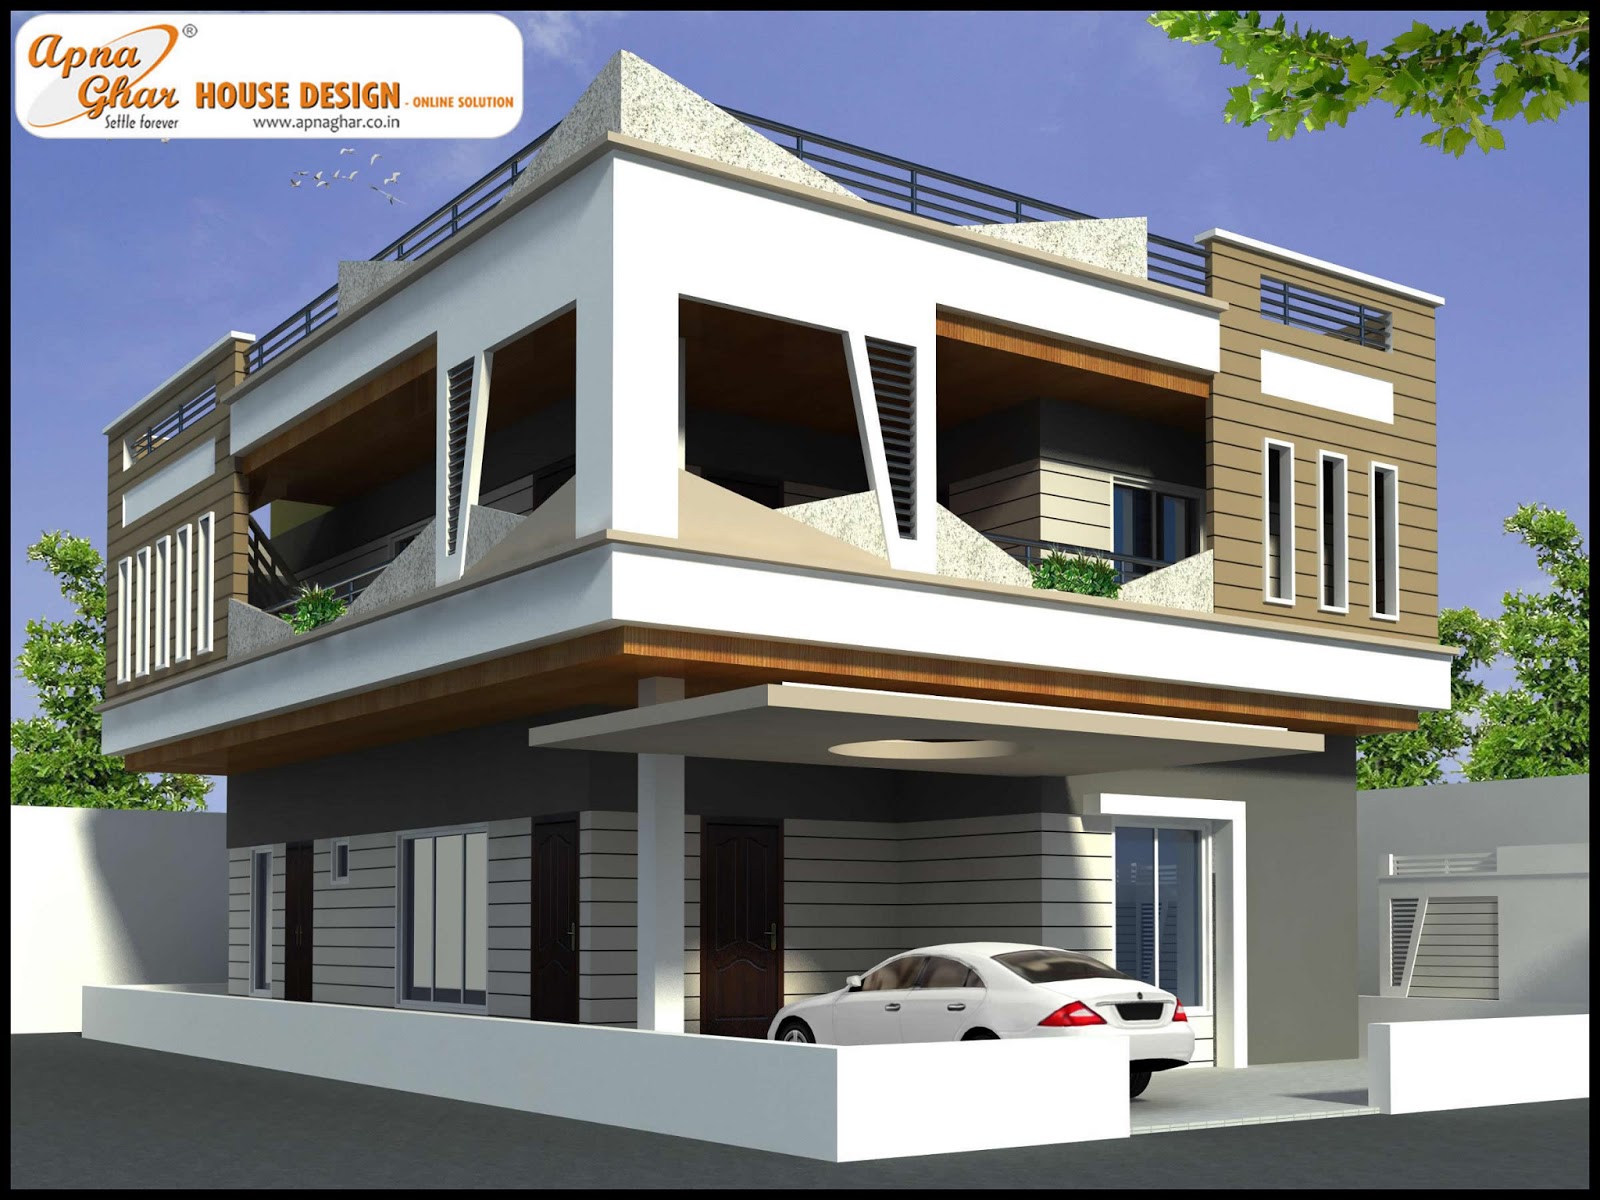 Duplex House Design  ApnaGhar House Design  Page 3